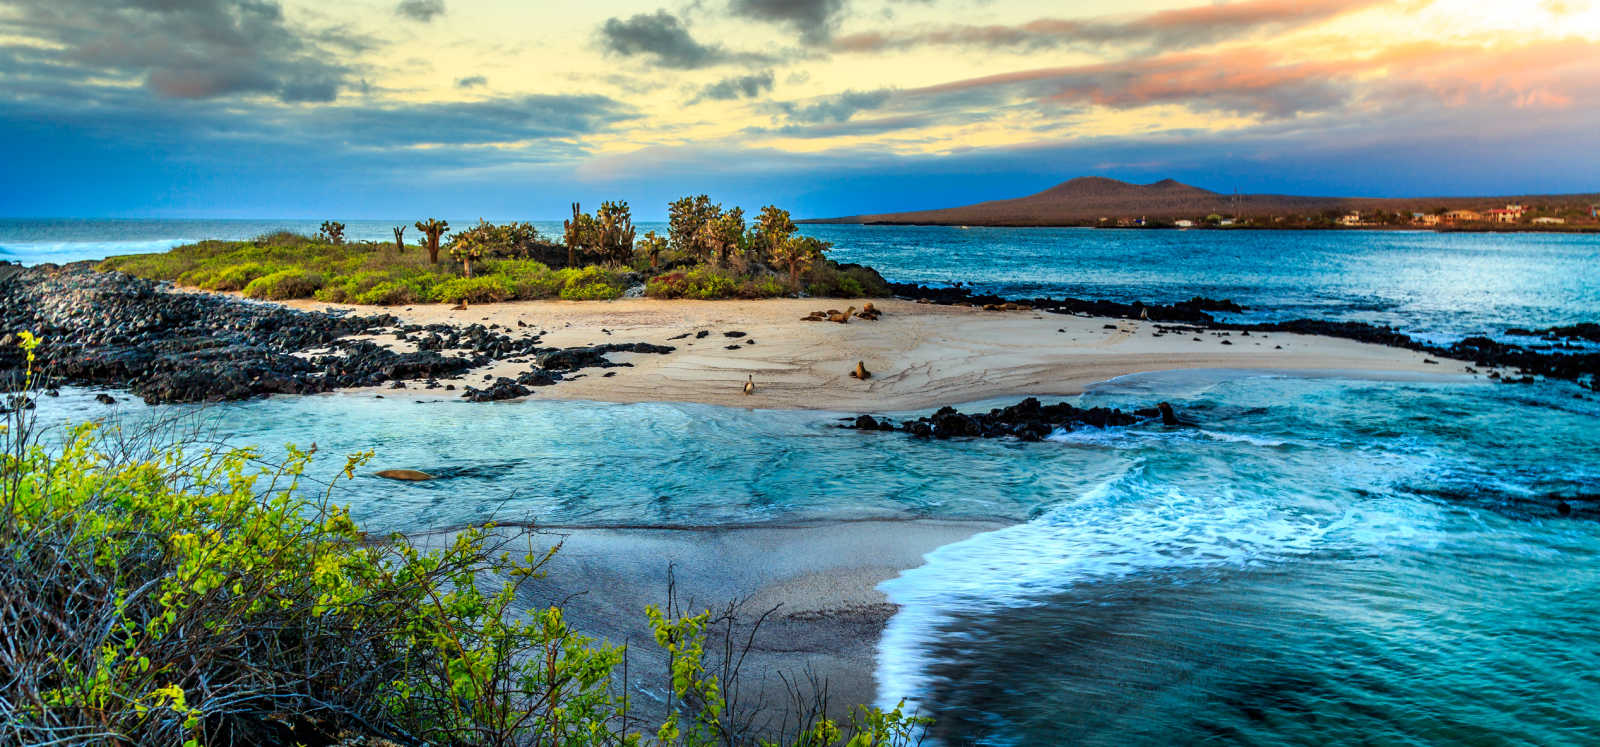 The stunning Galapagos Islands.